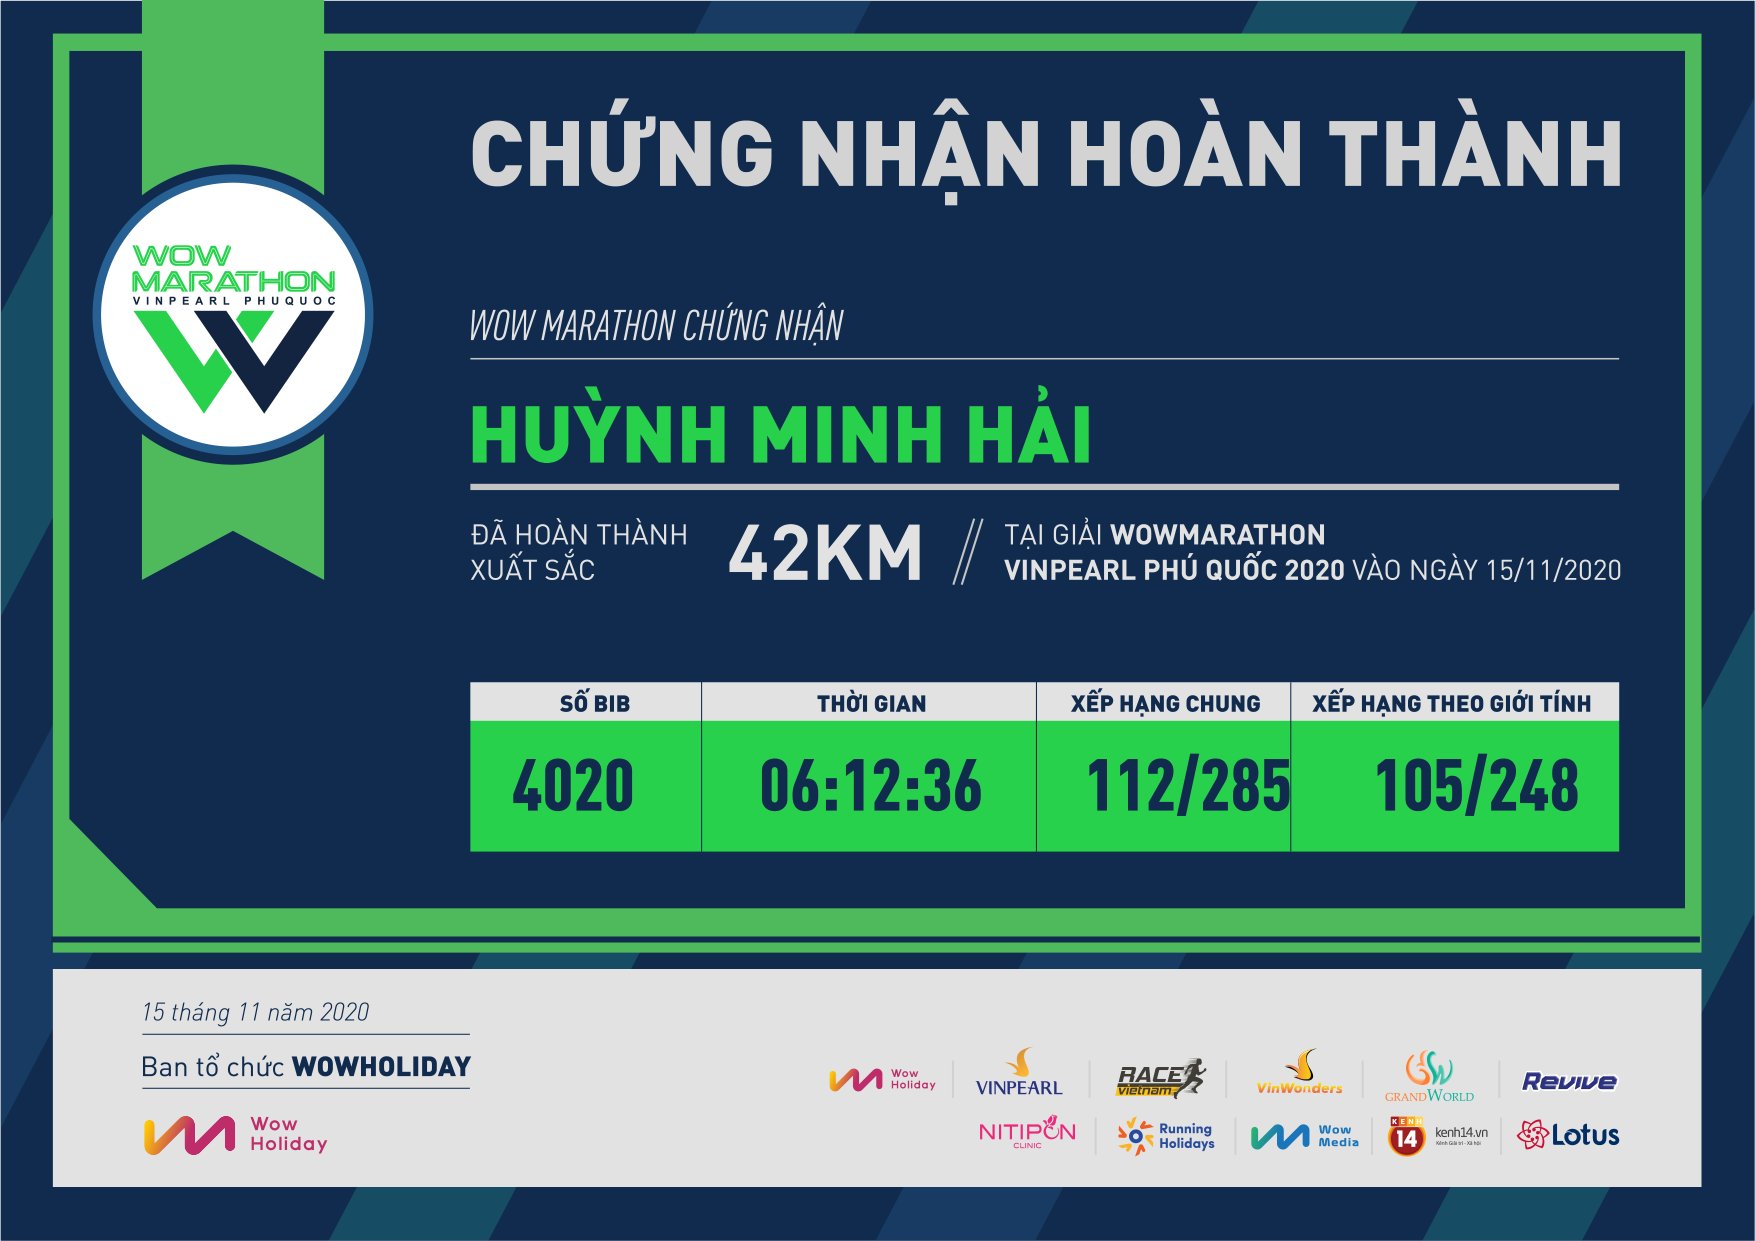 4020 - Huỳnh Minh Hải